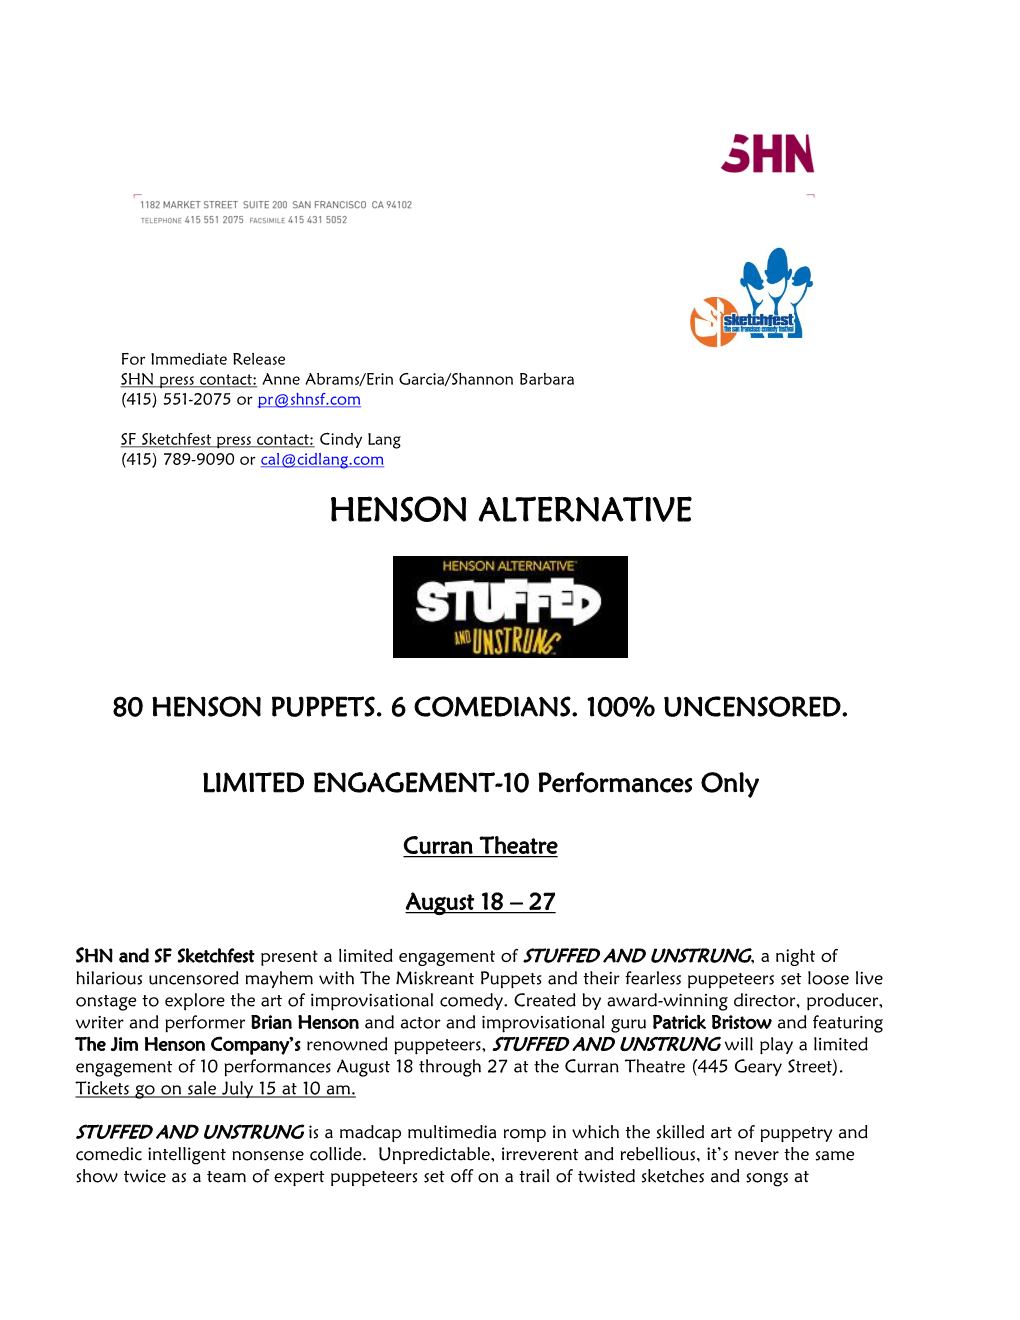 Henson Alternative